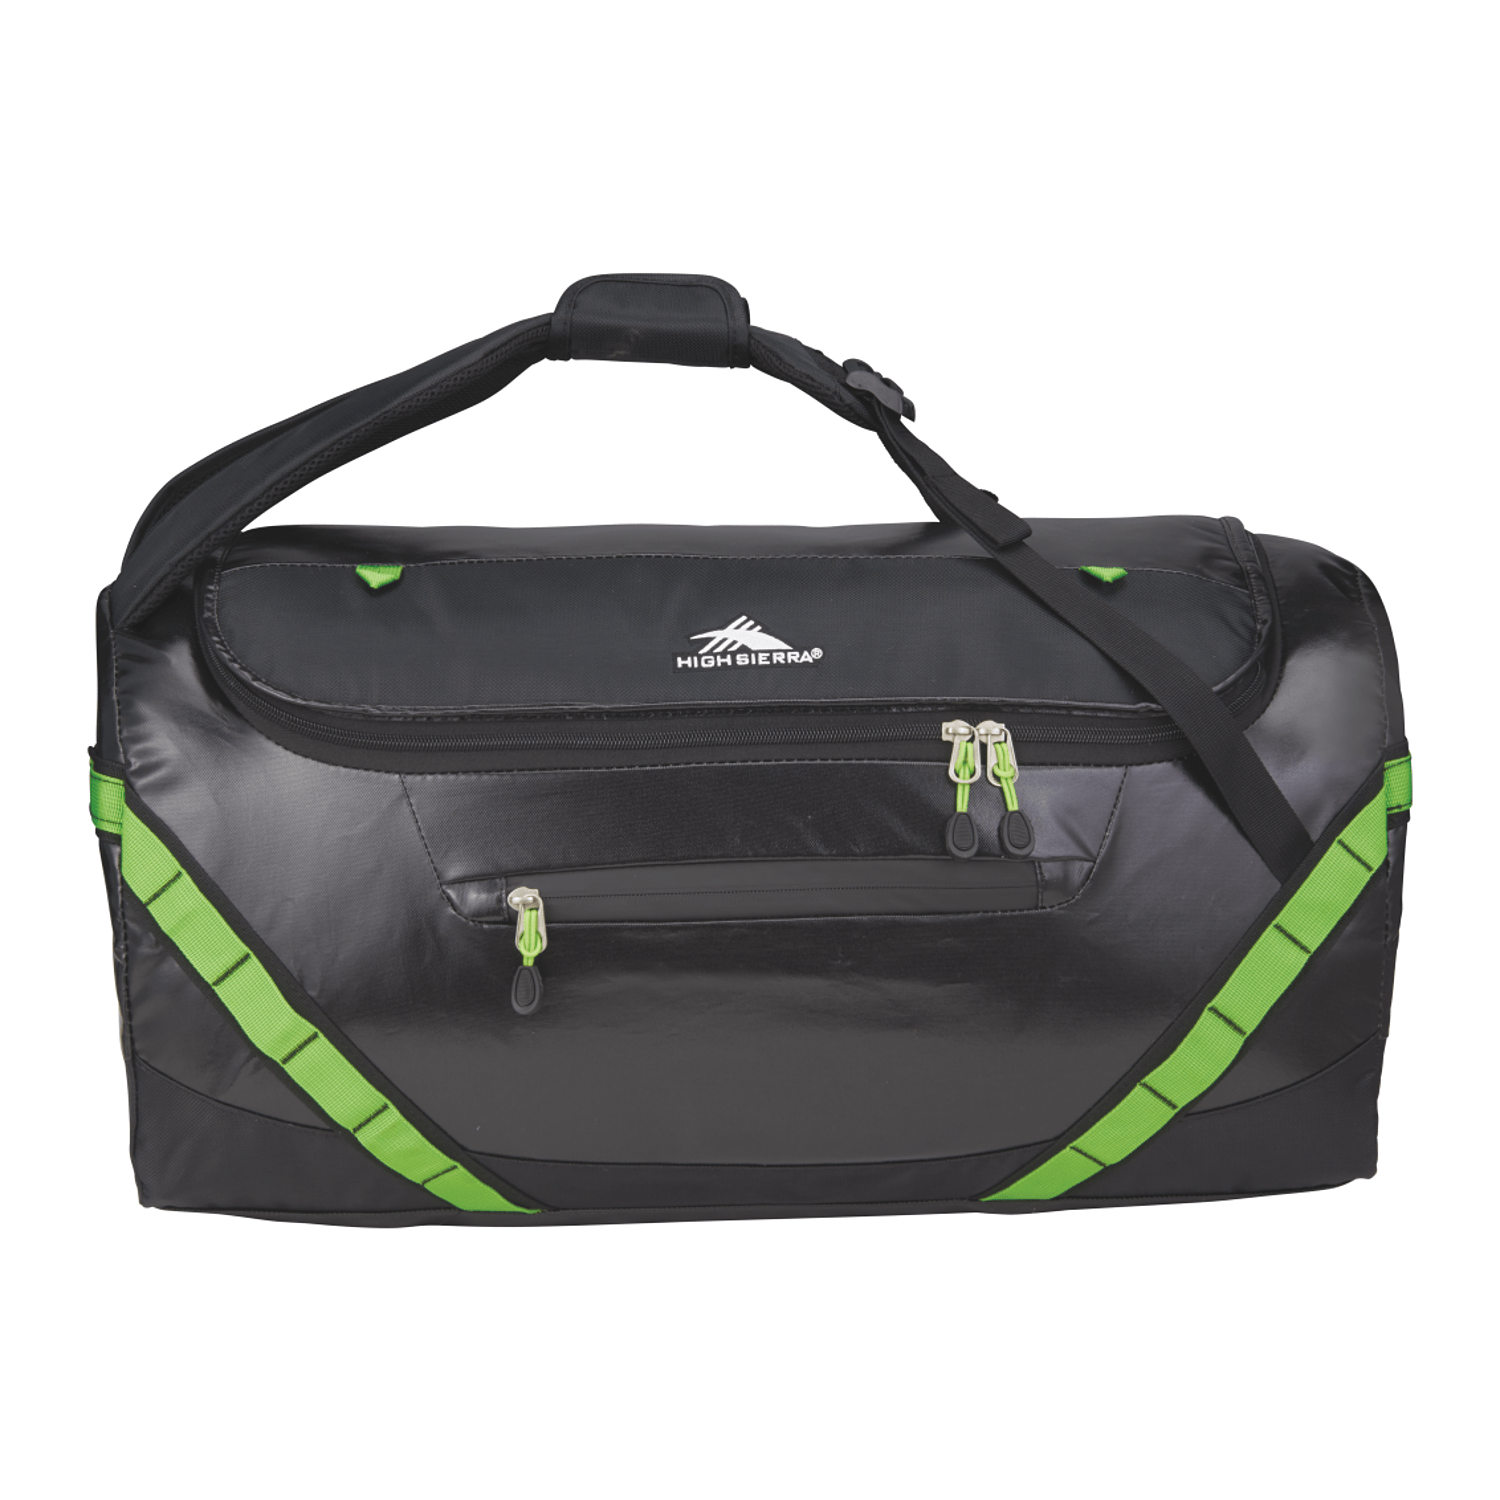 High Sierra Bags One Size / Black High Sierra - Kennesaw 24" Sport Duffel